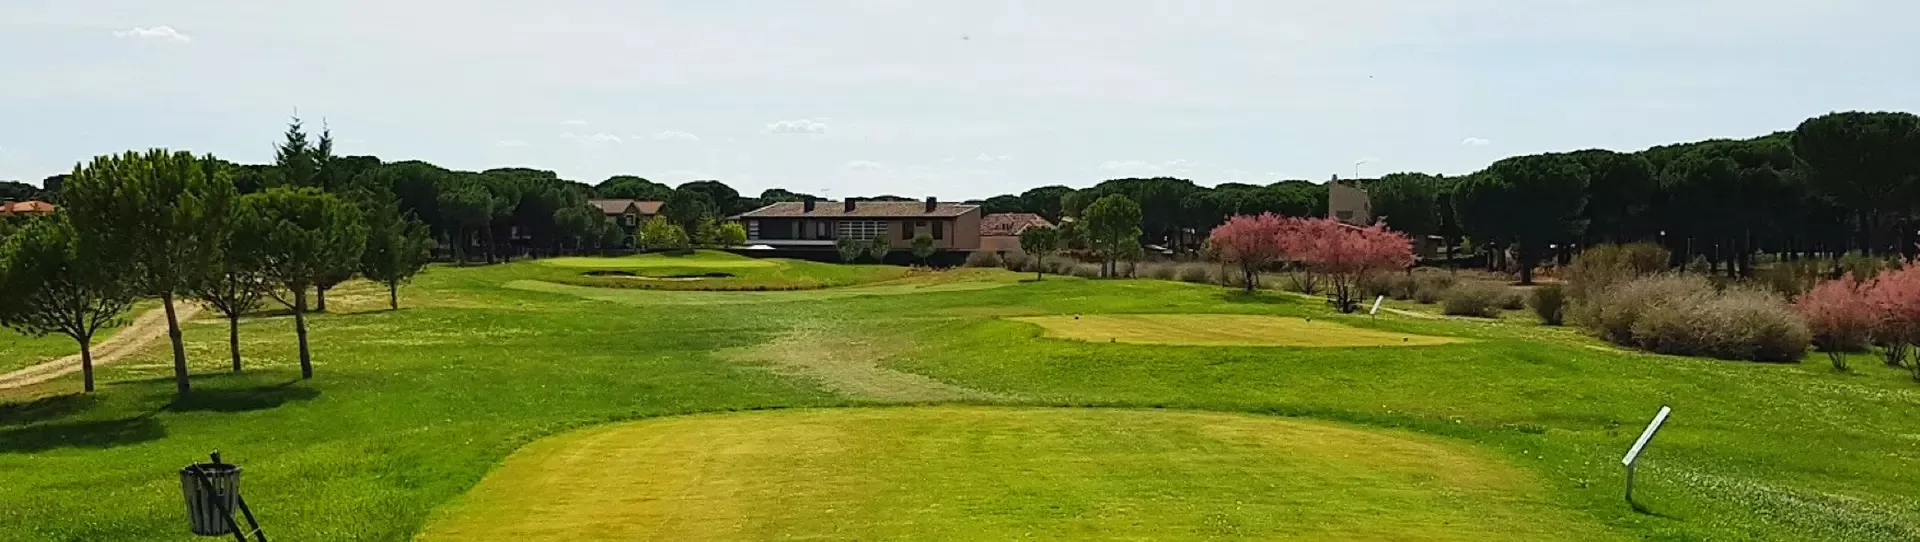 Spain golf courses - Aldeamayor Golf Course - Photo 2